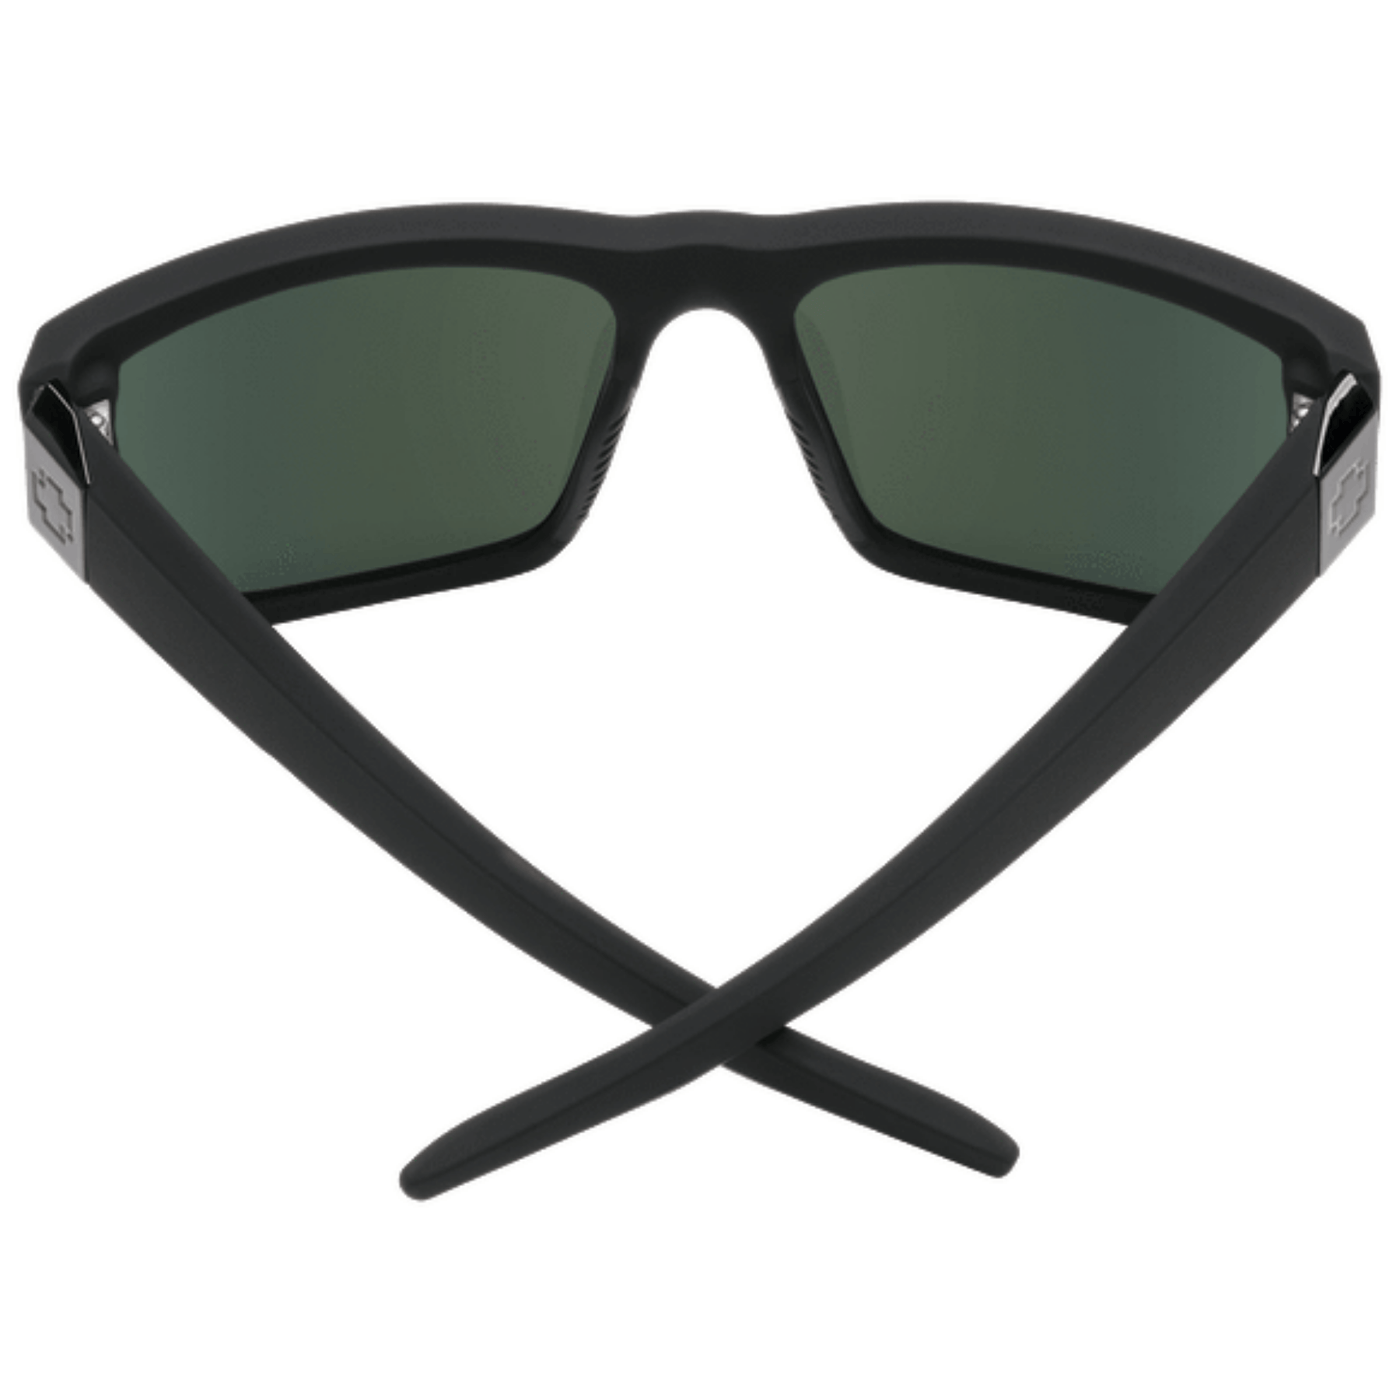 SPY DIRTY MO 2 Polarized Sunglasses, Happy Lens - Gray/Green 8Lines Shop - Fast Shipping